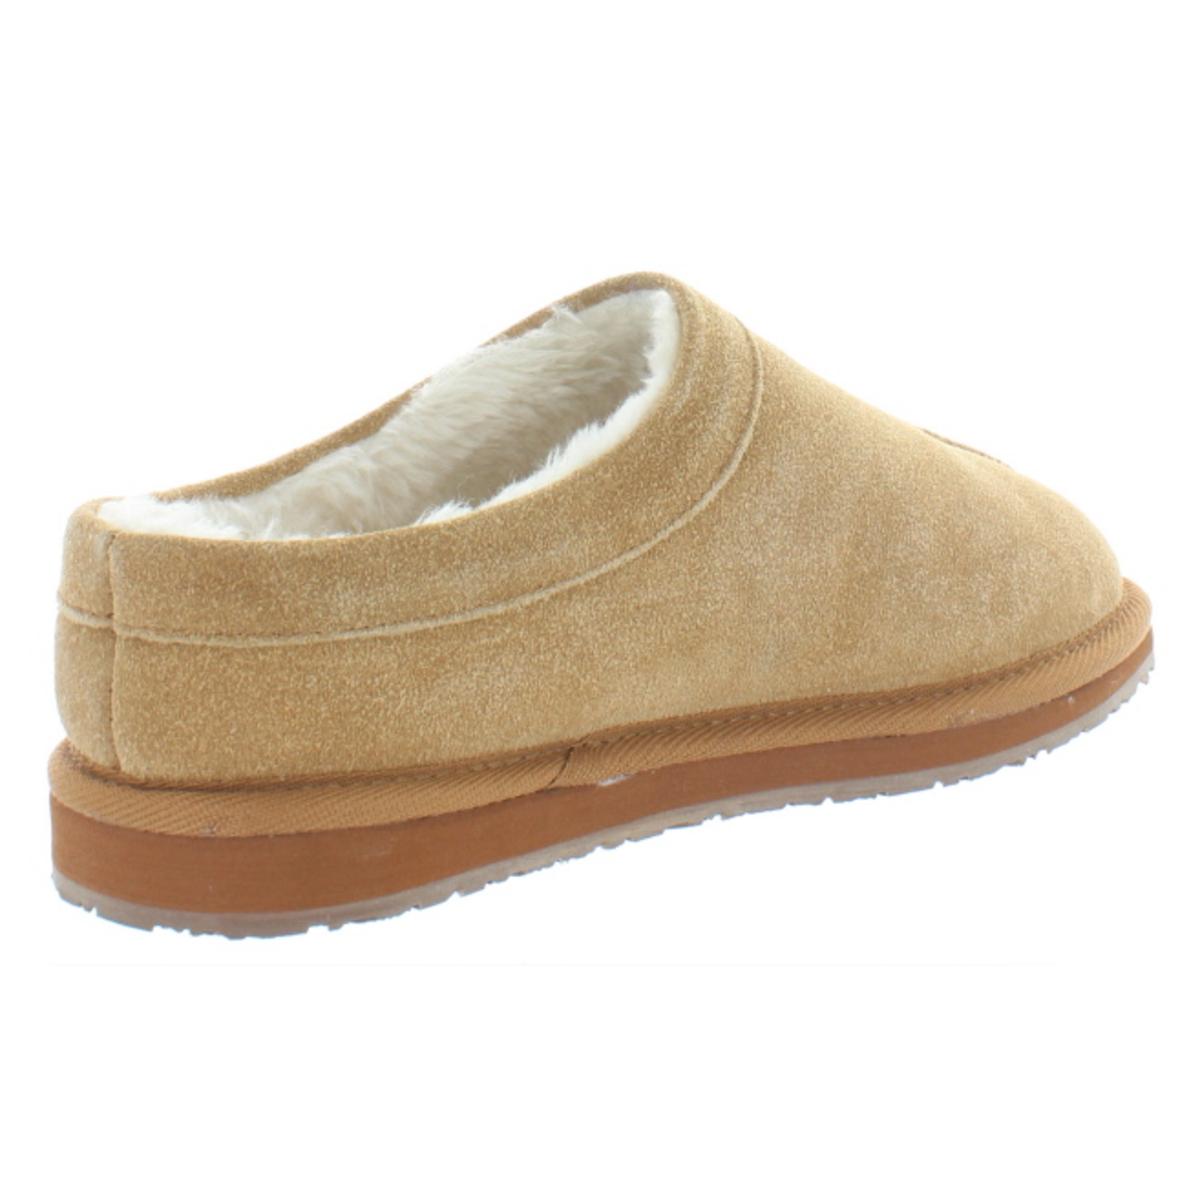 Minnetonka Womens Tan Suede Mule Slippers Shoes 8 Medium (B,M) BHFO ...